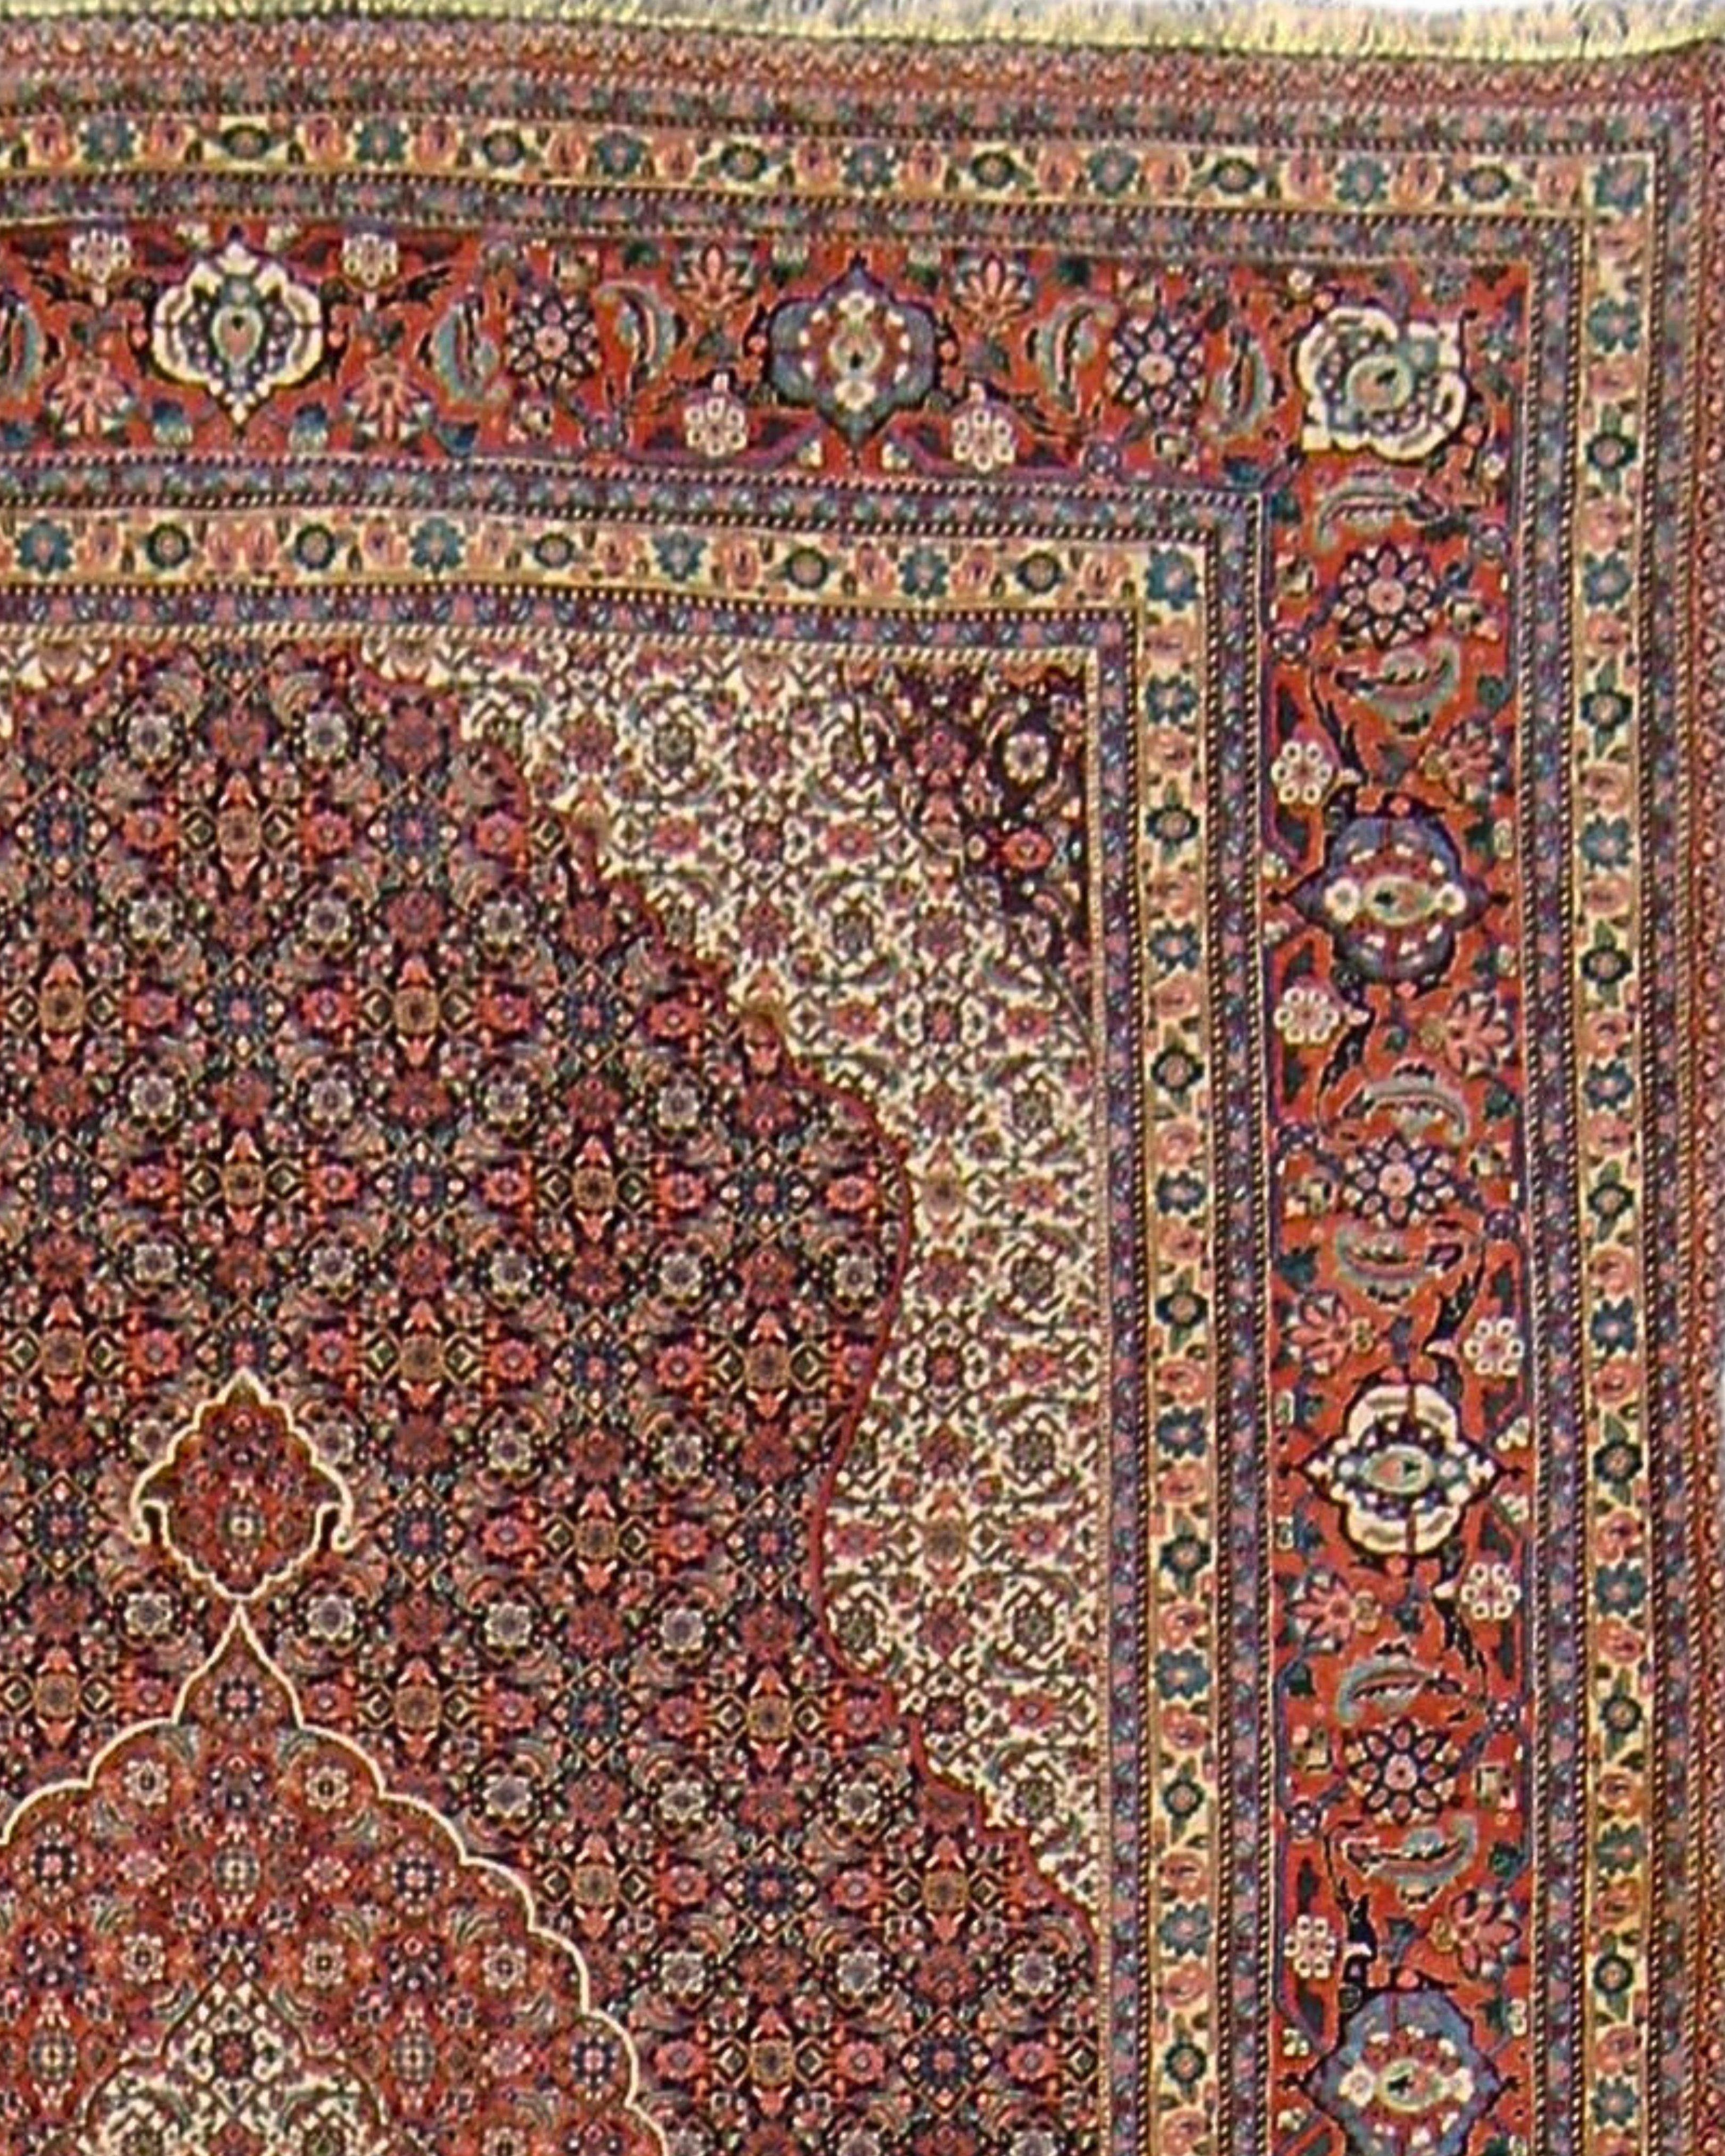 Vintage Persian Tabriz Rug, c. 1970

Excellent condition.

Additional Information:
Dimensions: 6'7